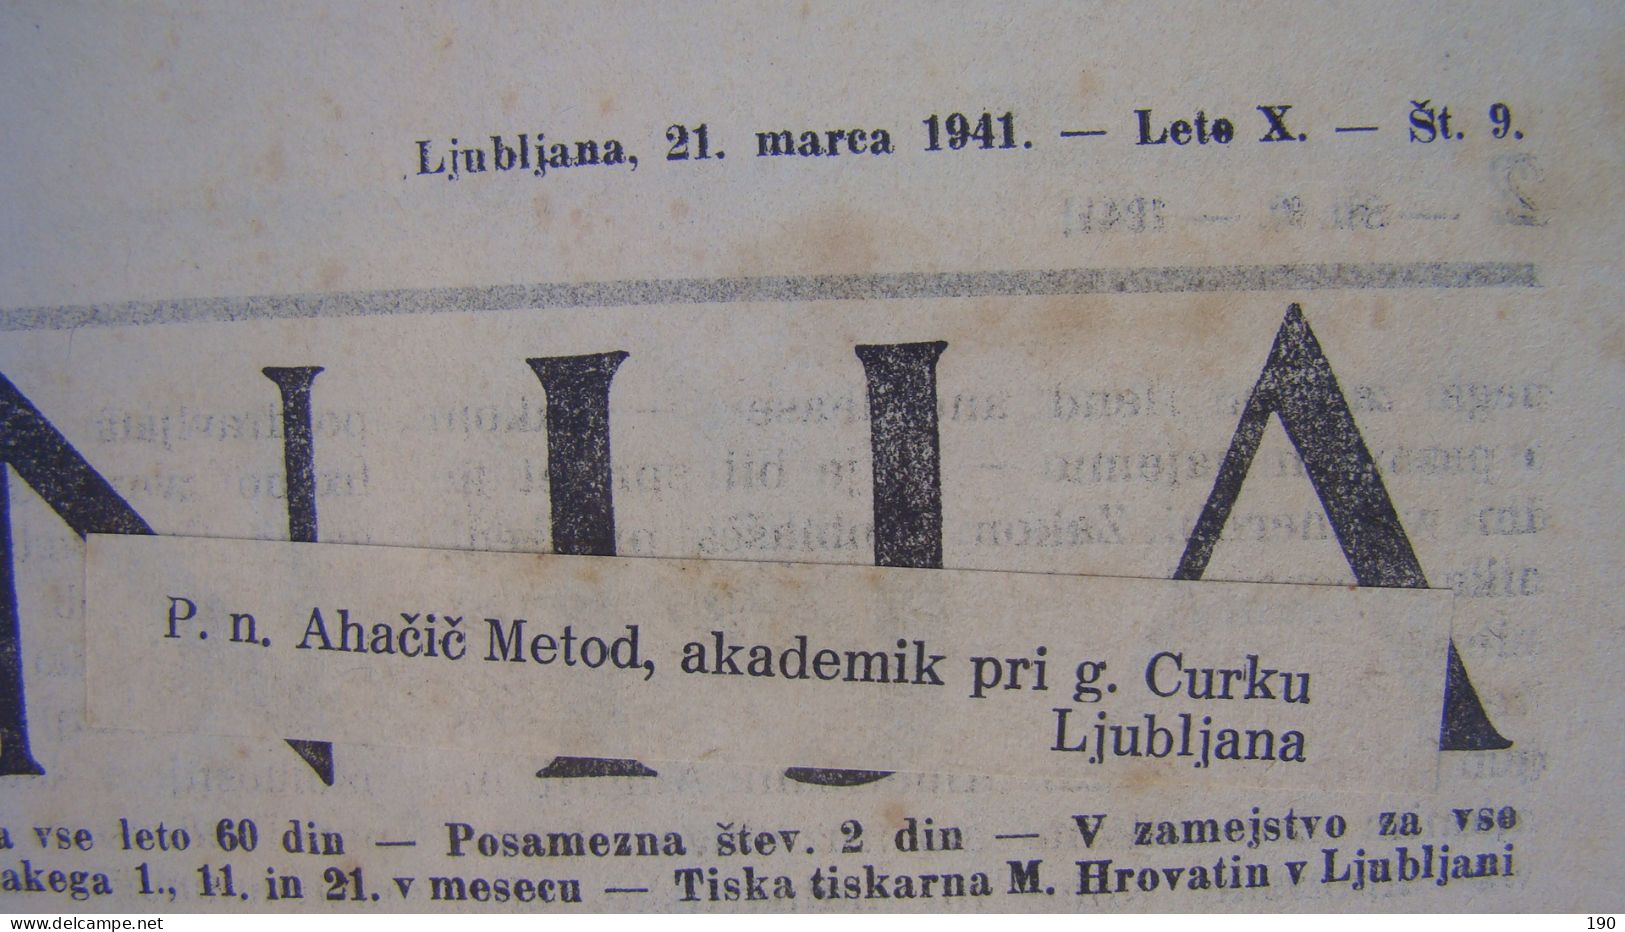 NEWSPAPER SLOVENIJA - Langues Slaves